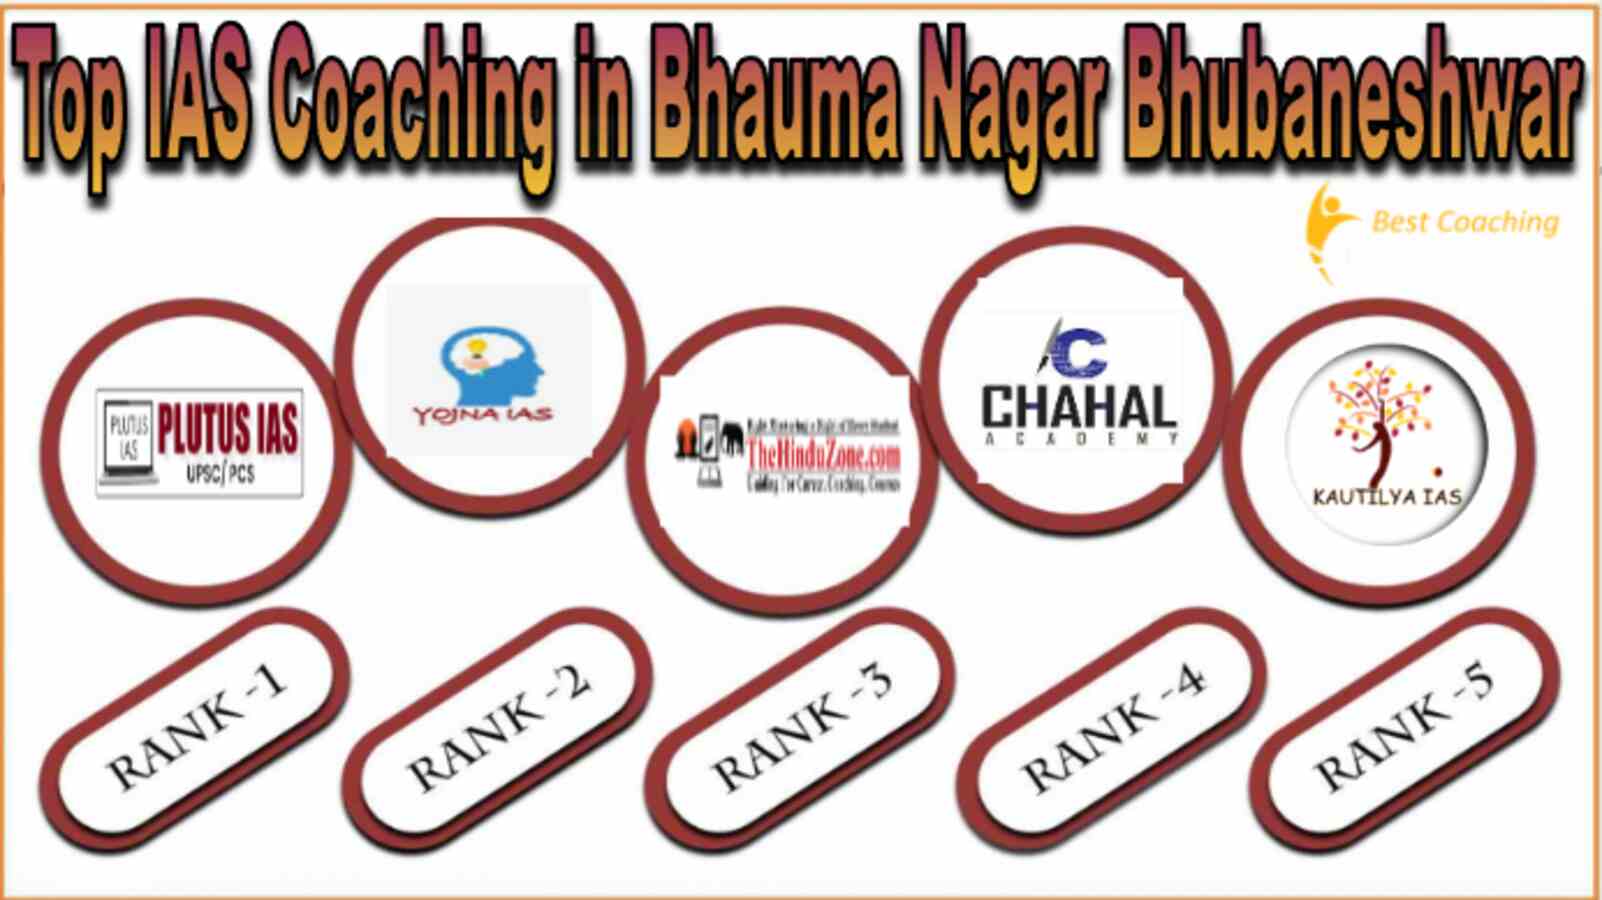 Top IAS coaching in Bhauma Nagar Bhubaneshwar